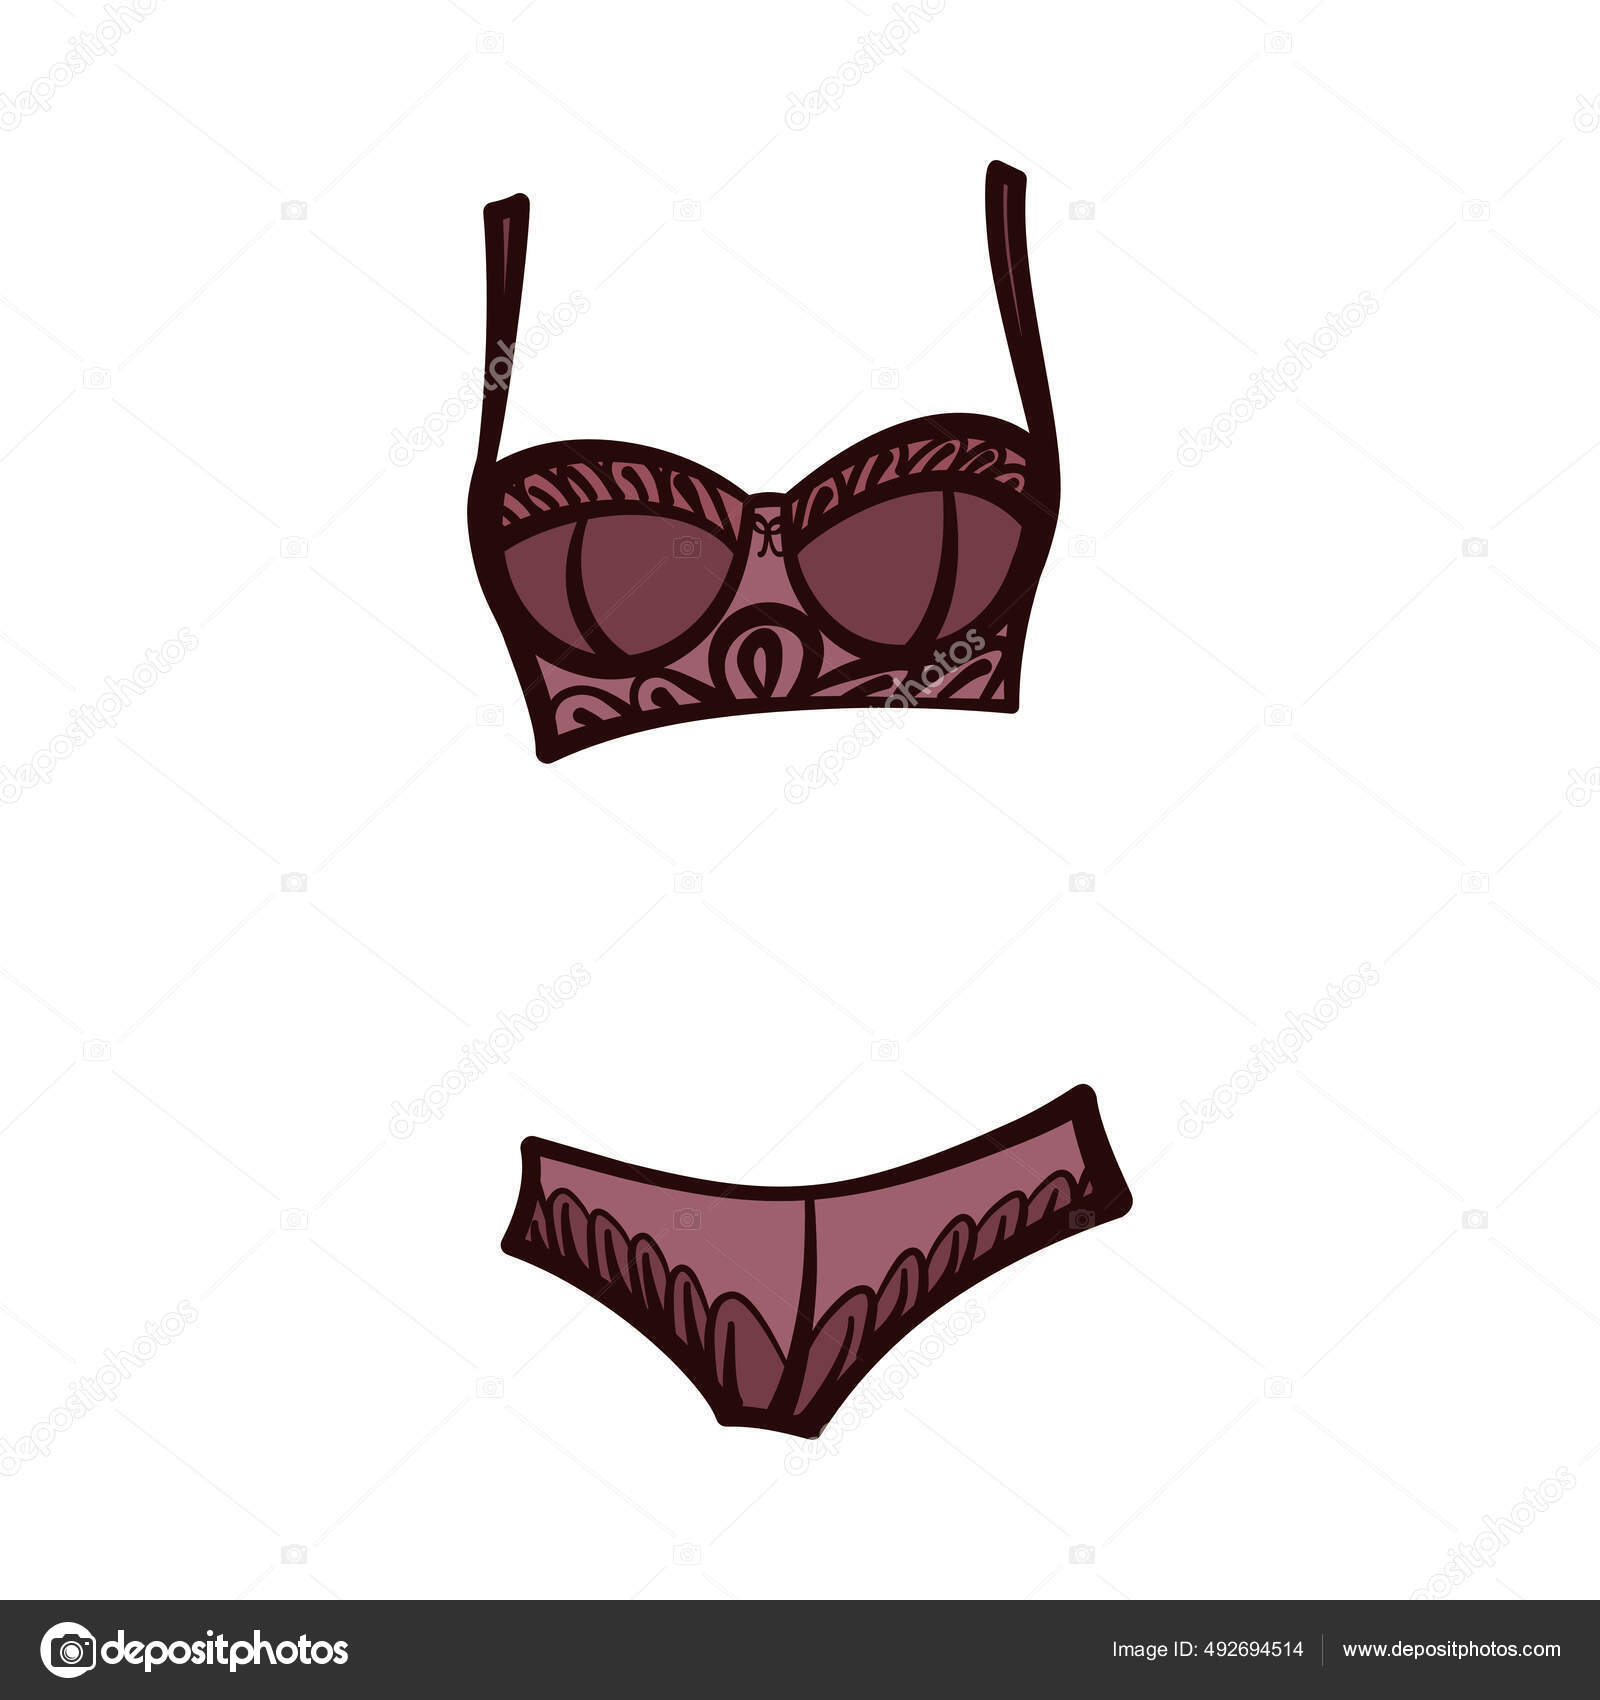 https://st2.depositphotos.com/1288156/49269/v/1600/depositphotos_492694514-stock-illustration-elegant-balconette-bra-knickers-panties.jpg